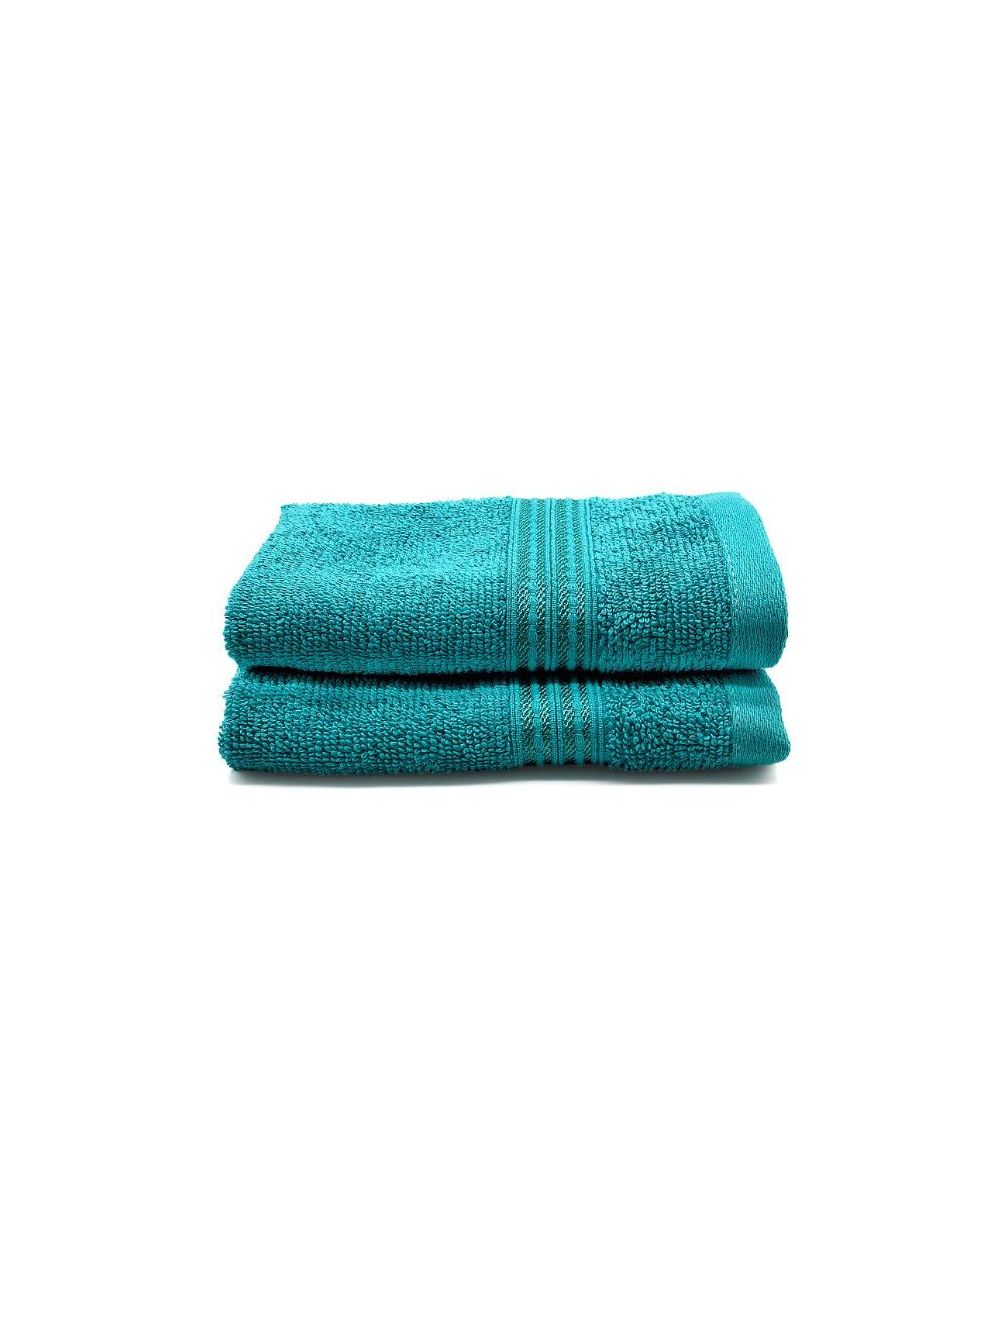 Rahalife 100% Cotton 2-Piece Face Towel Set, Classic Collection, Sky Blue-14RLFT035